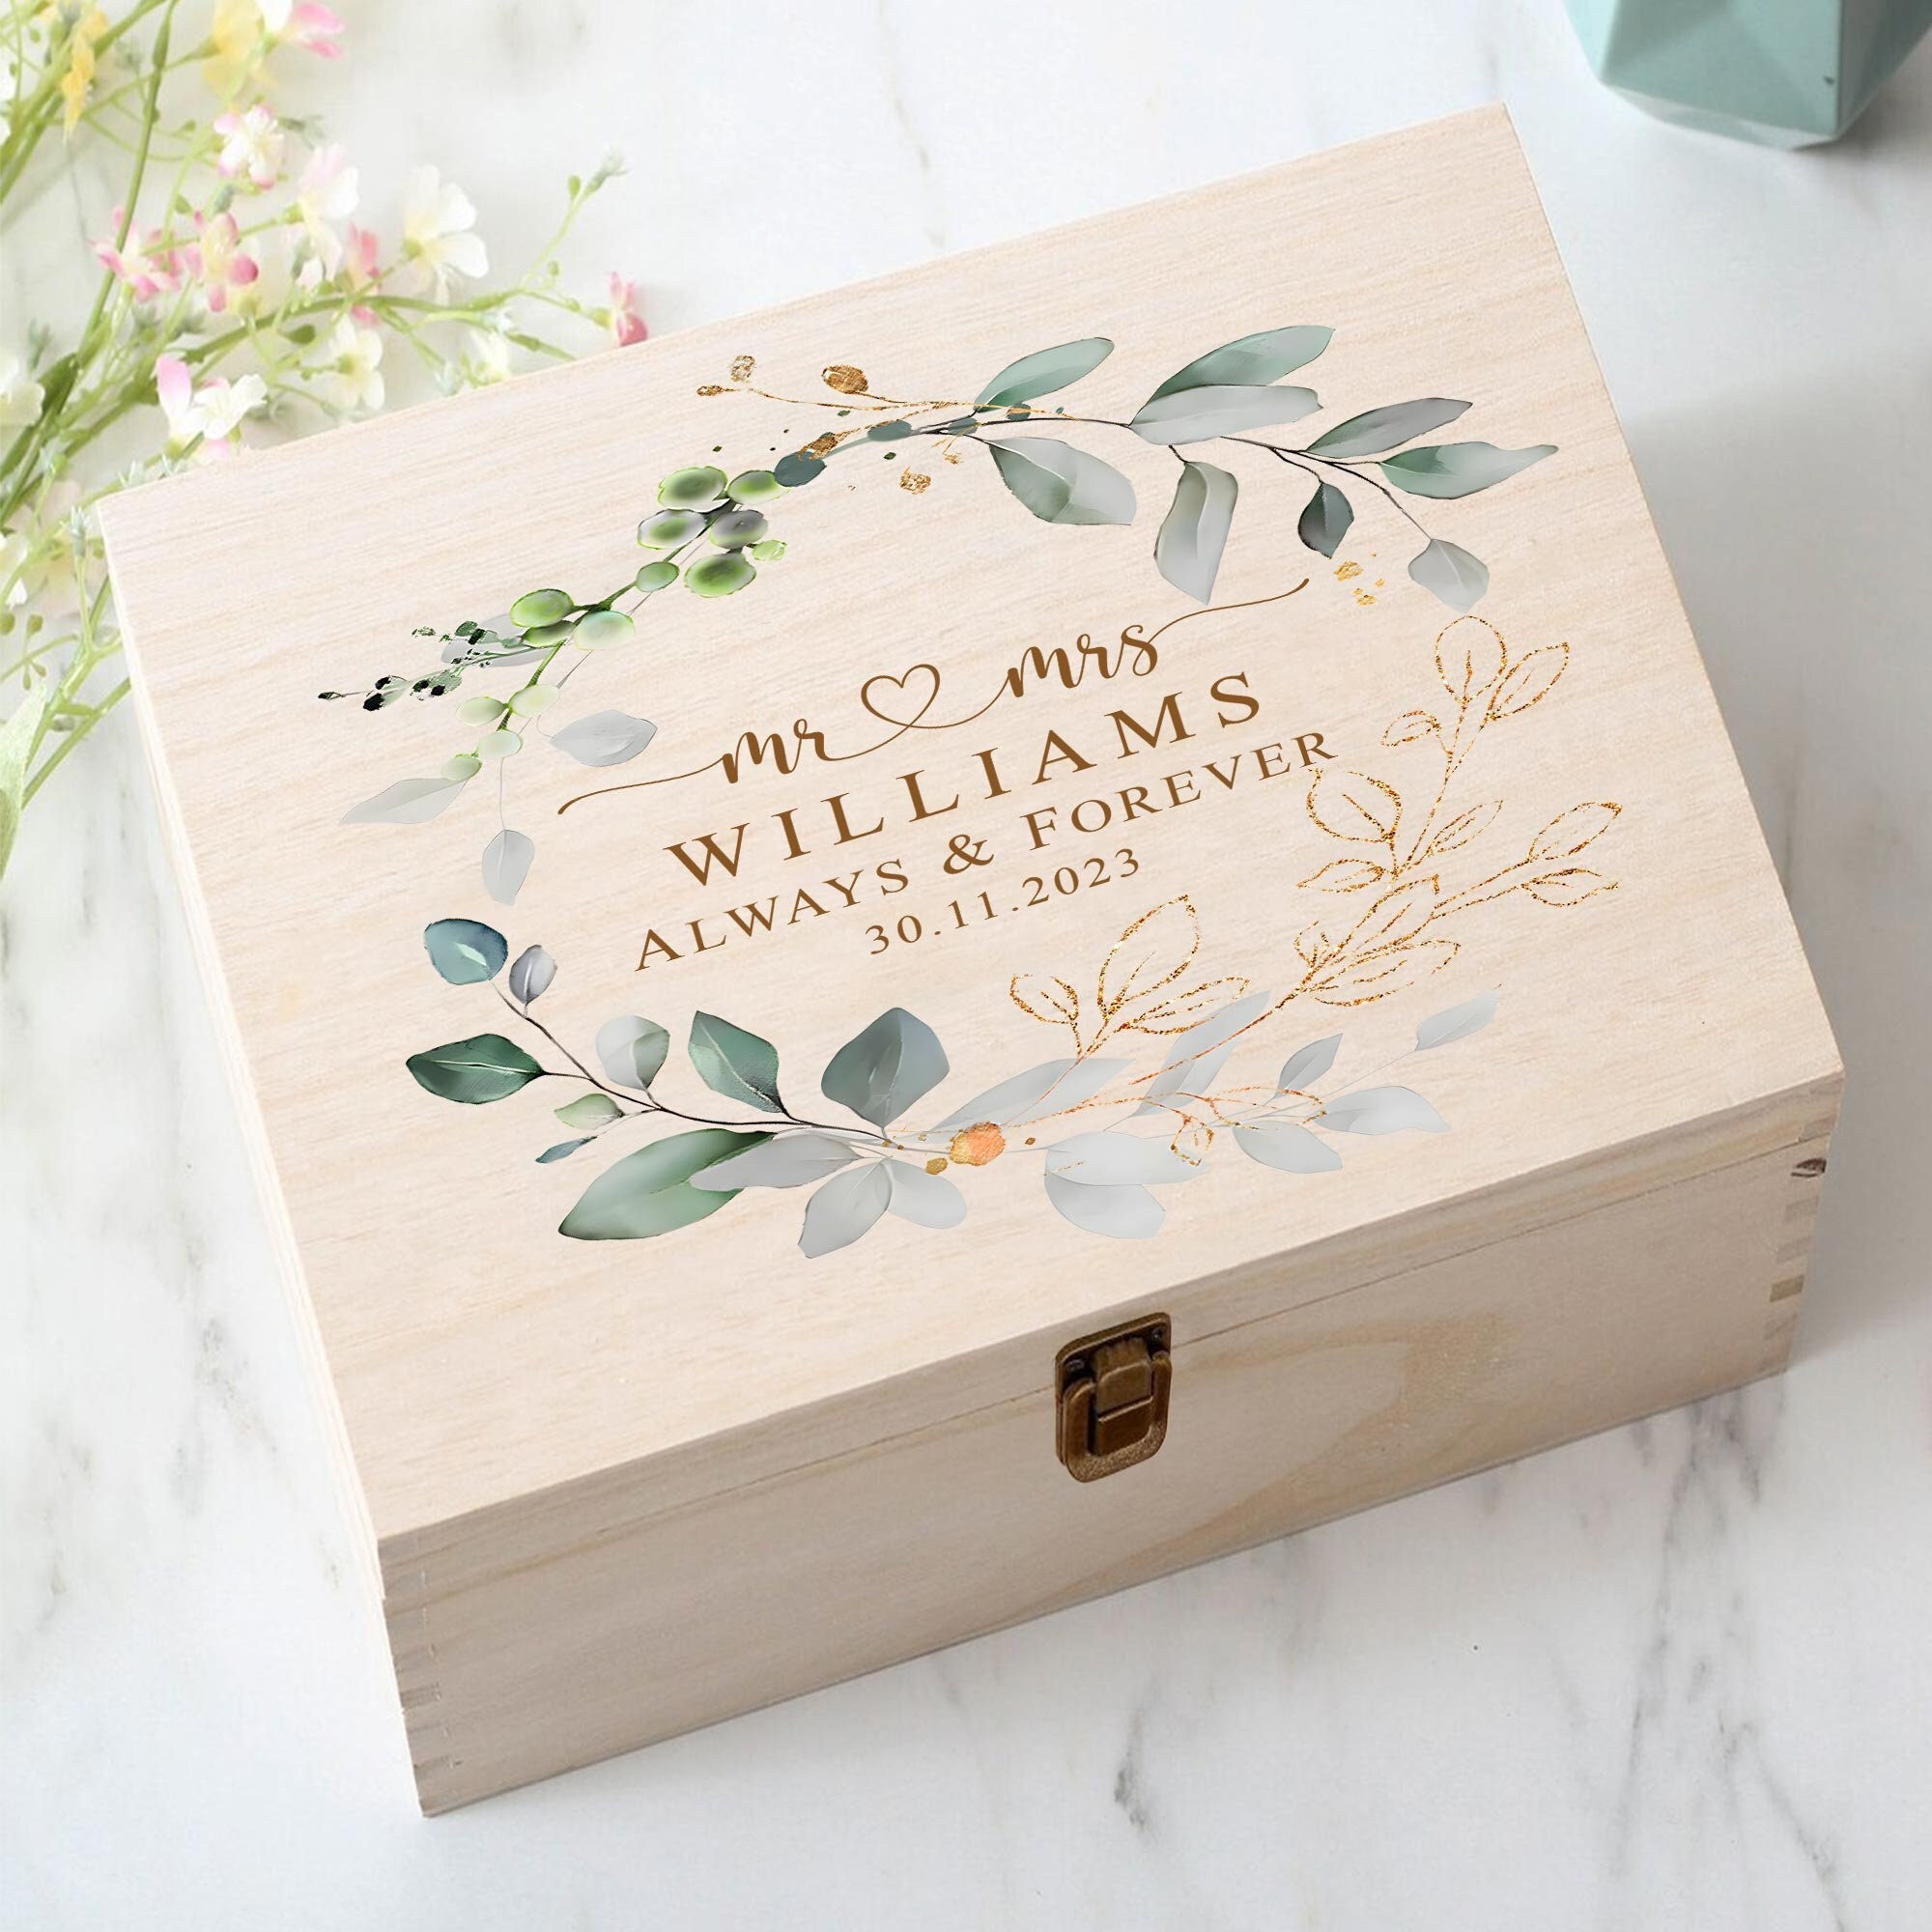 Travel Memory Box, Adventure Archive Box, Personalized Adventures Box,  Custom Memory Box, Wood Travel Souvenir Box, Valentine's Gift for Him 